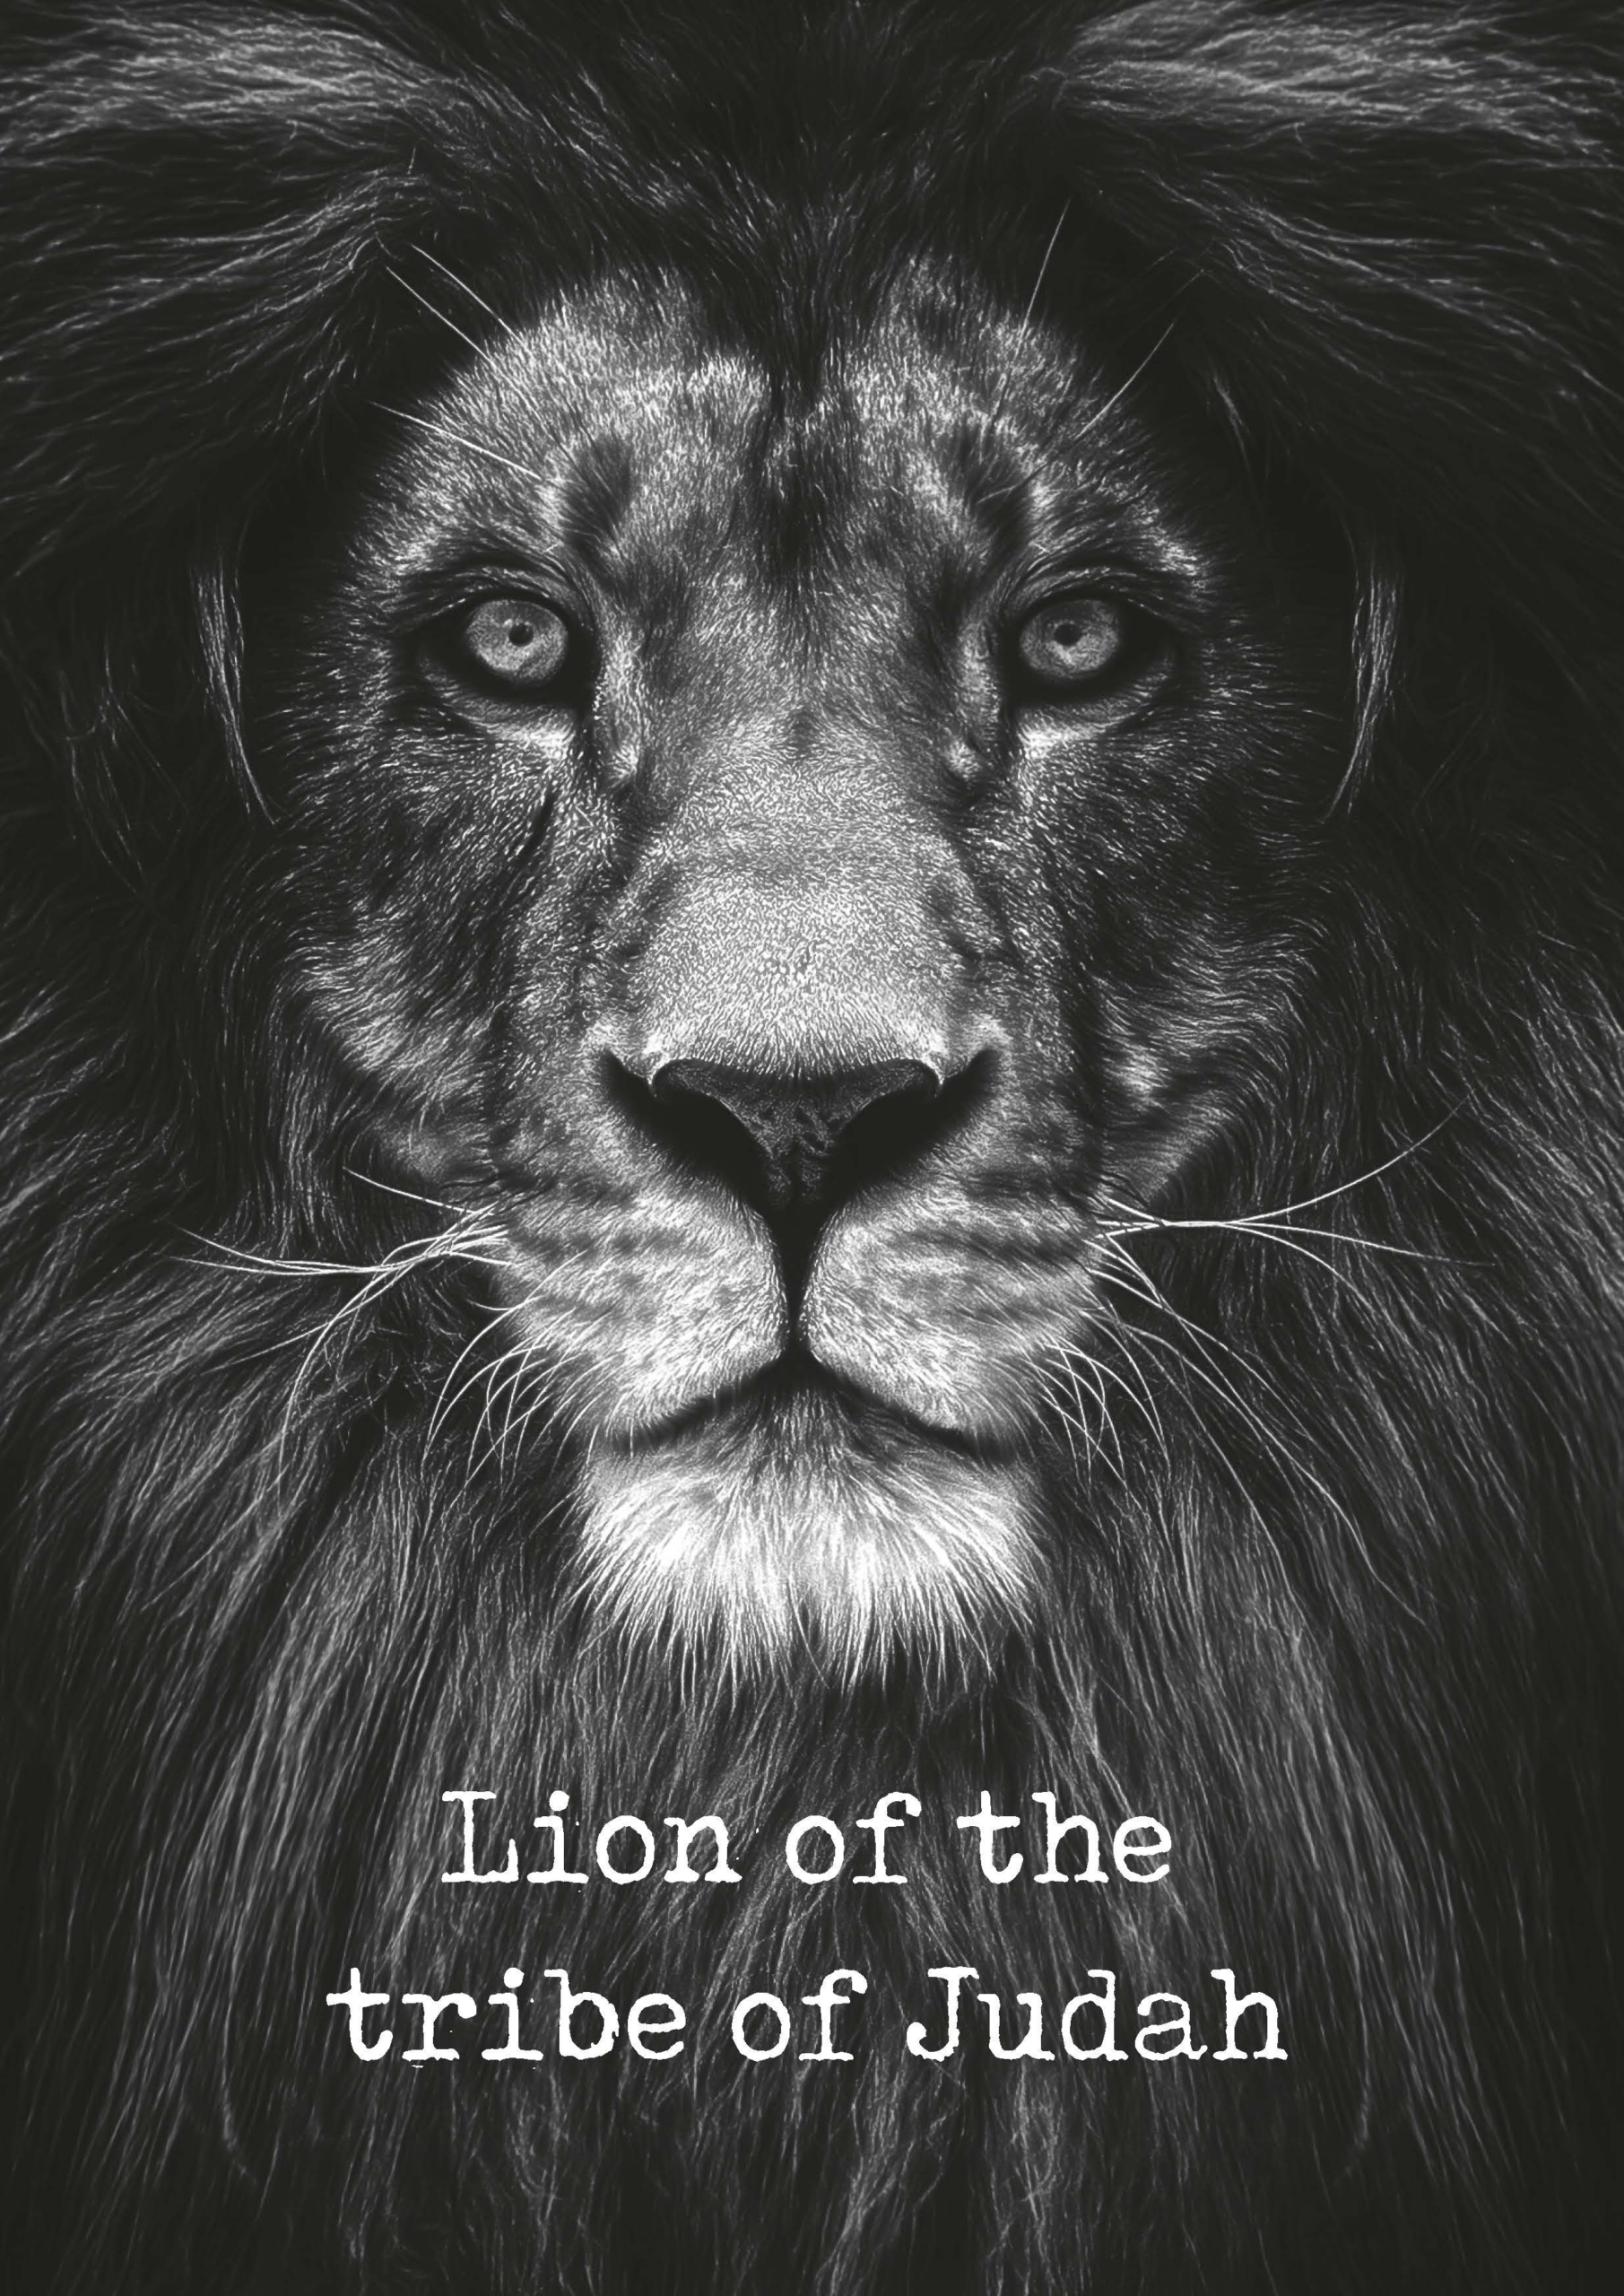 Metal Deco A3 'Lion of the tribe of Judah' - MA11623 -  Metal Deco bij MajesticAlly